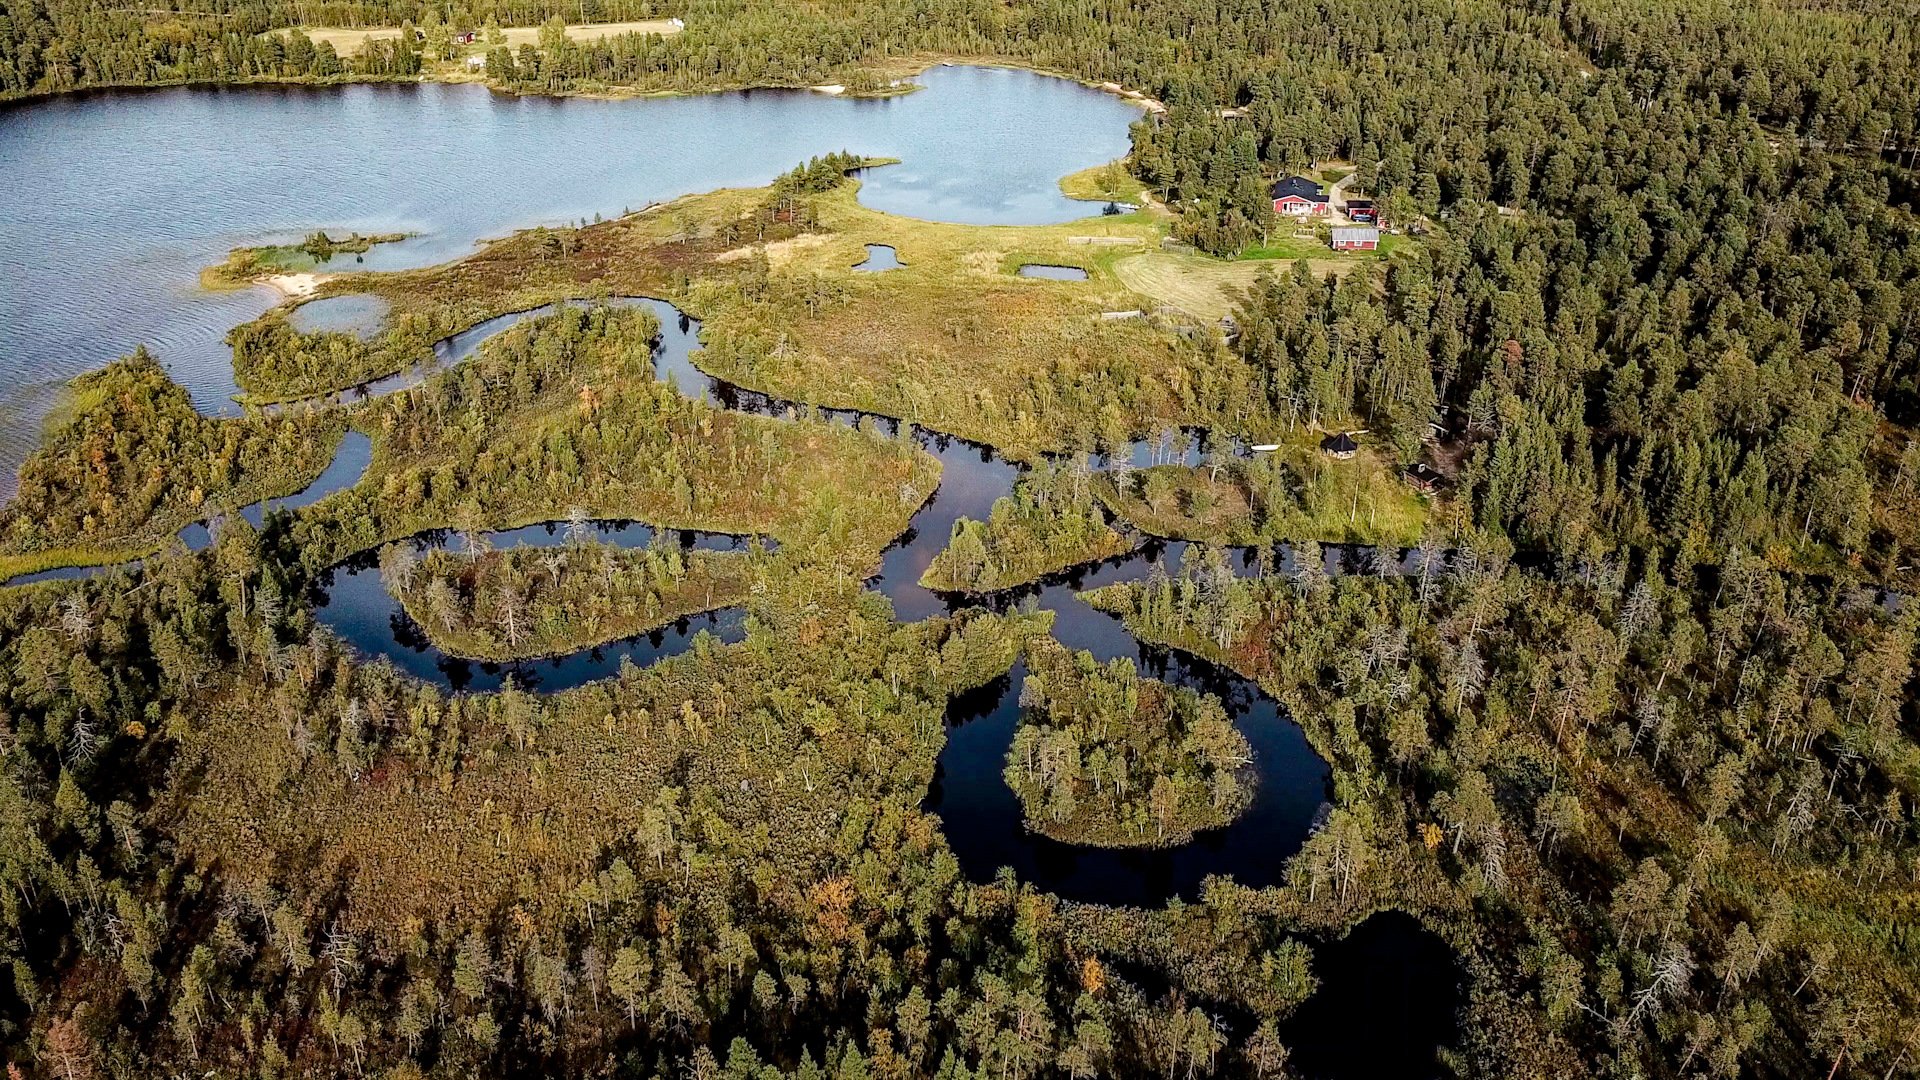 Республика тысячи озер. Озеро Штерн Финляндия. Озеро Суоми Финляндия. Финские озера Финляндия. Озеро Оулуярви Финляндия.